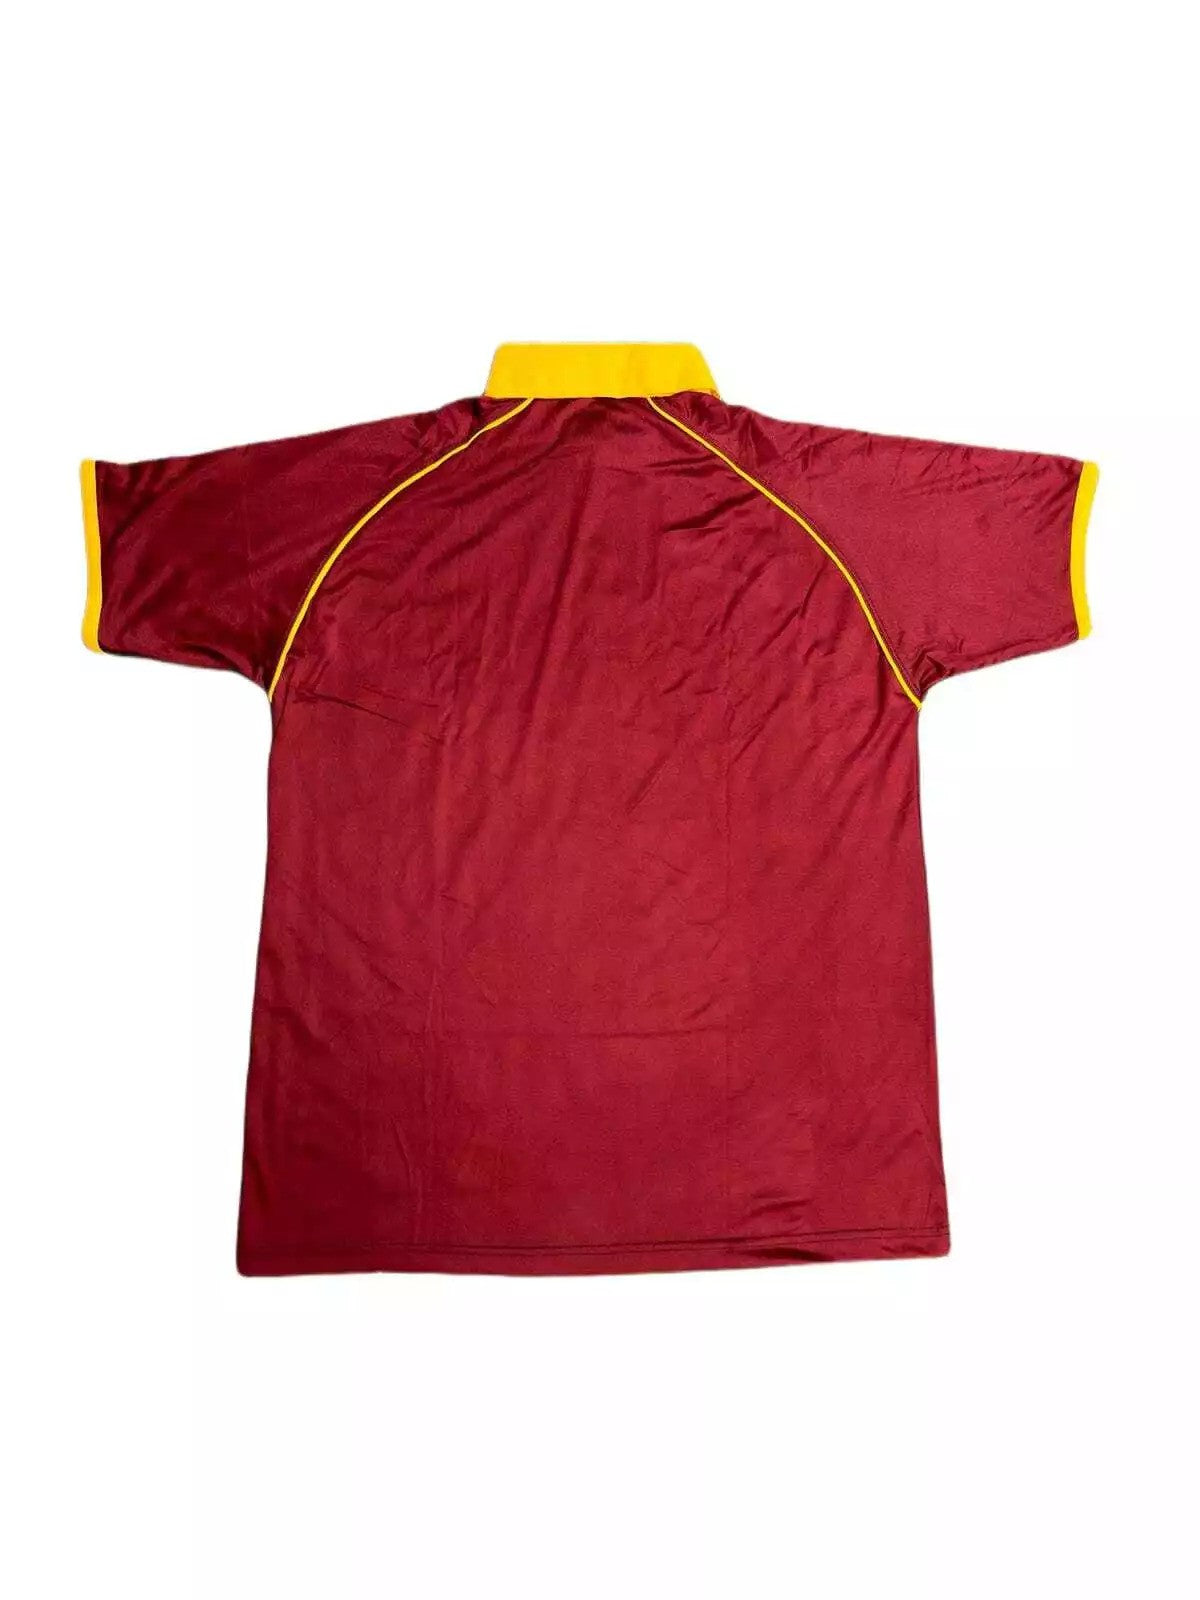 Mens Cricket team replica odi Shirt Jersey West Indies